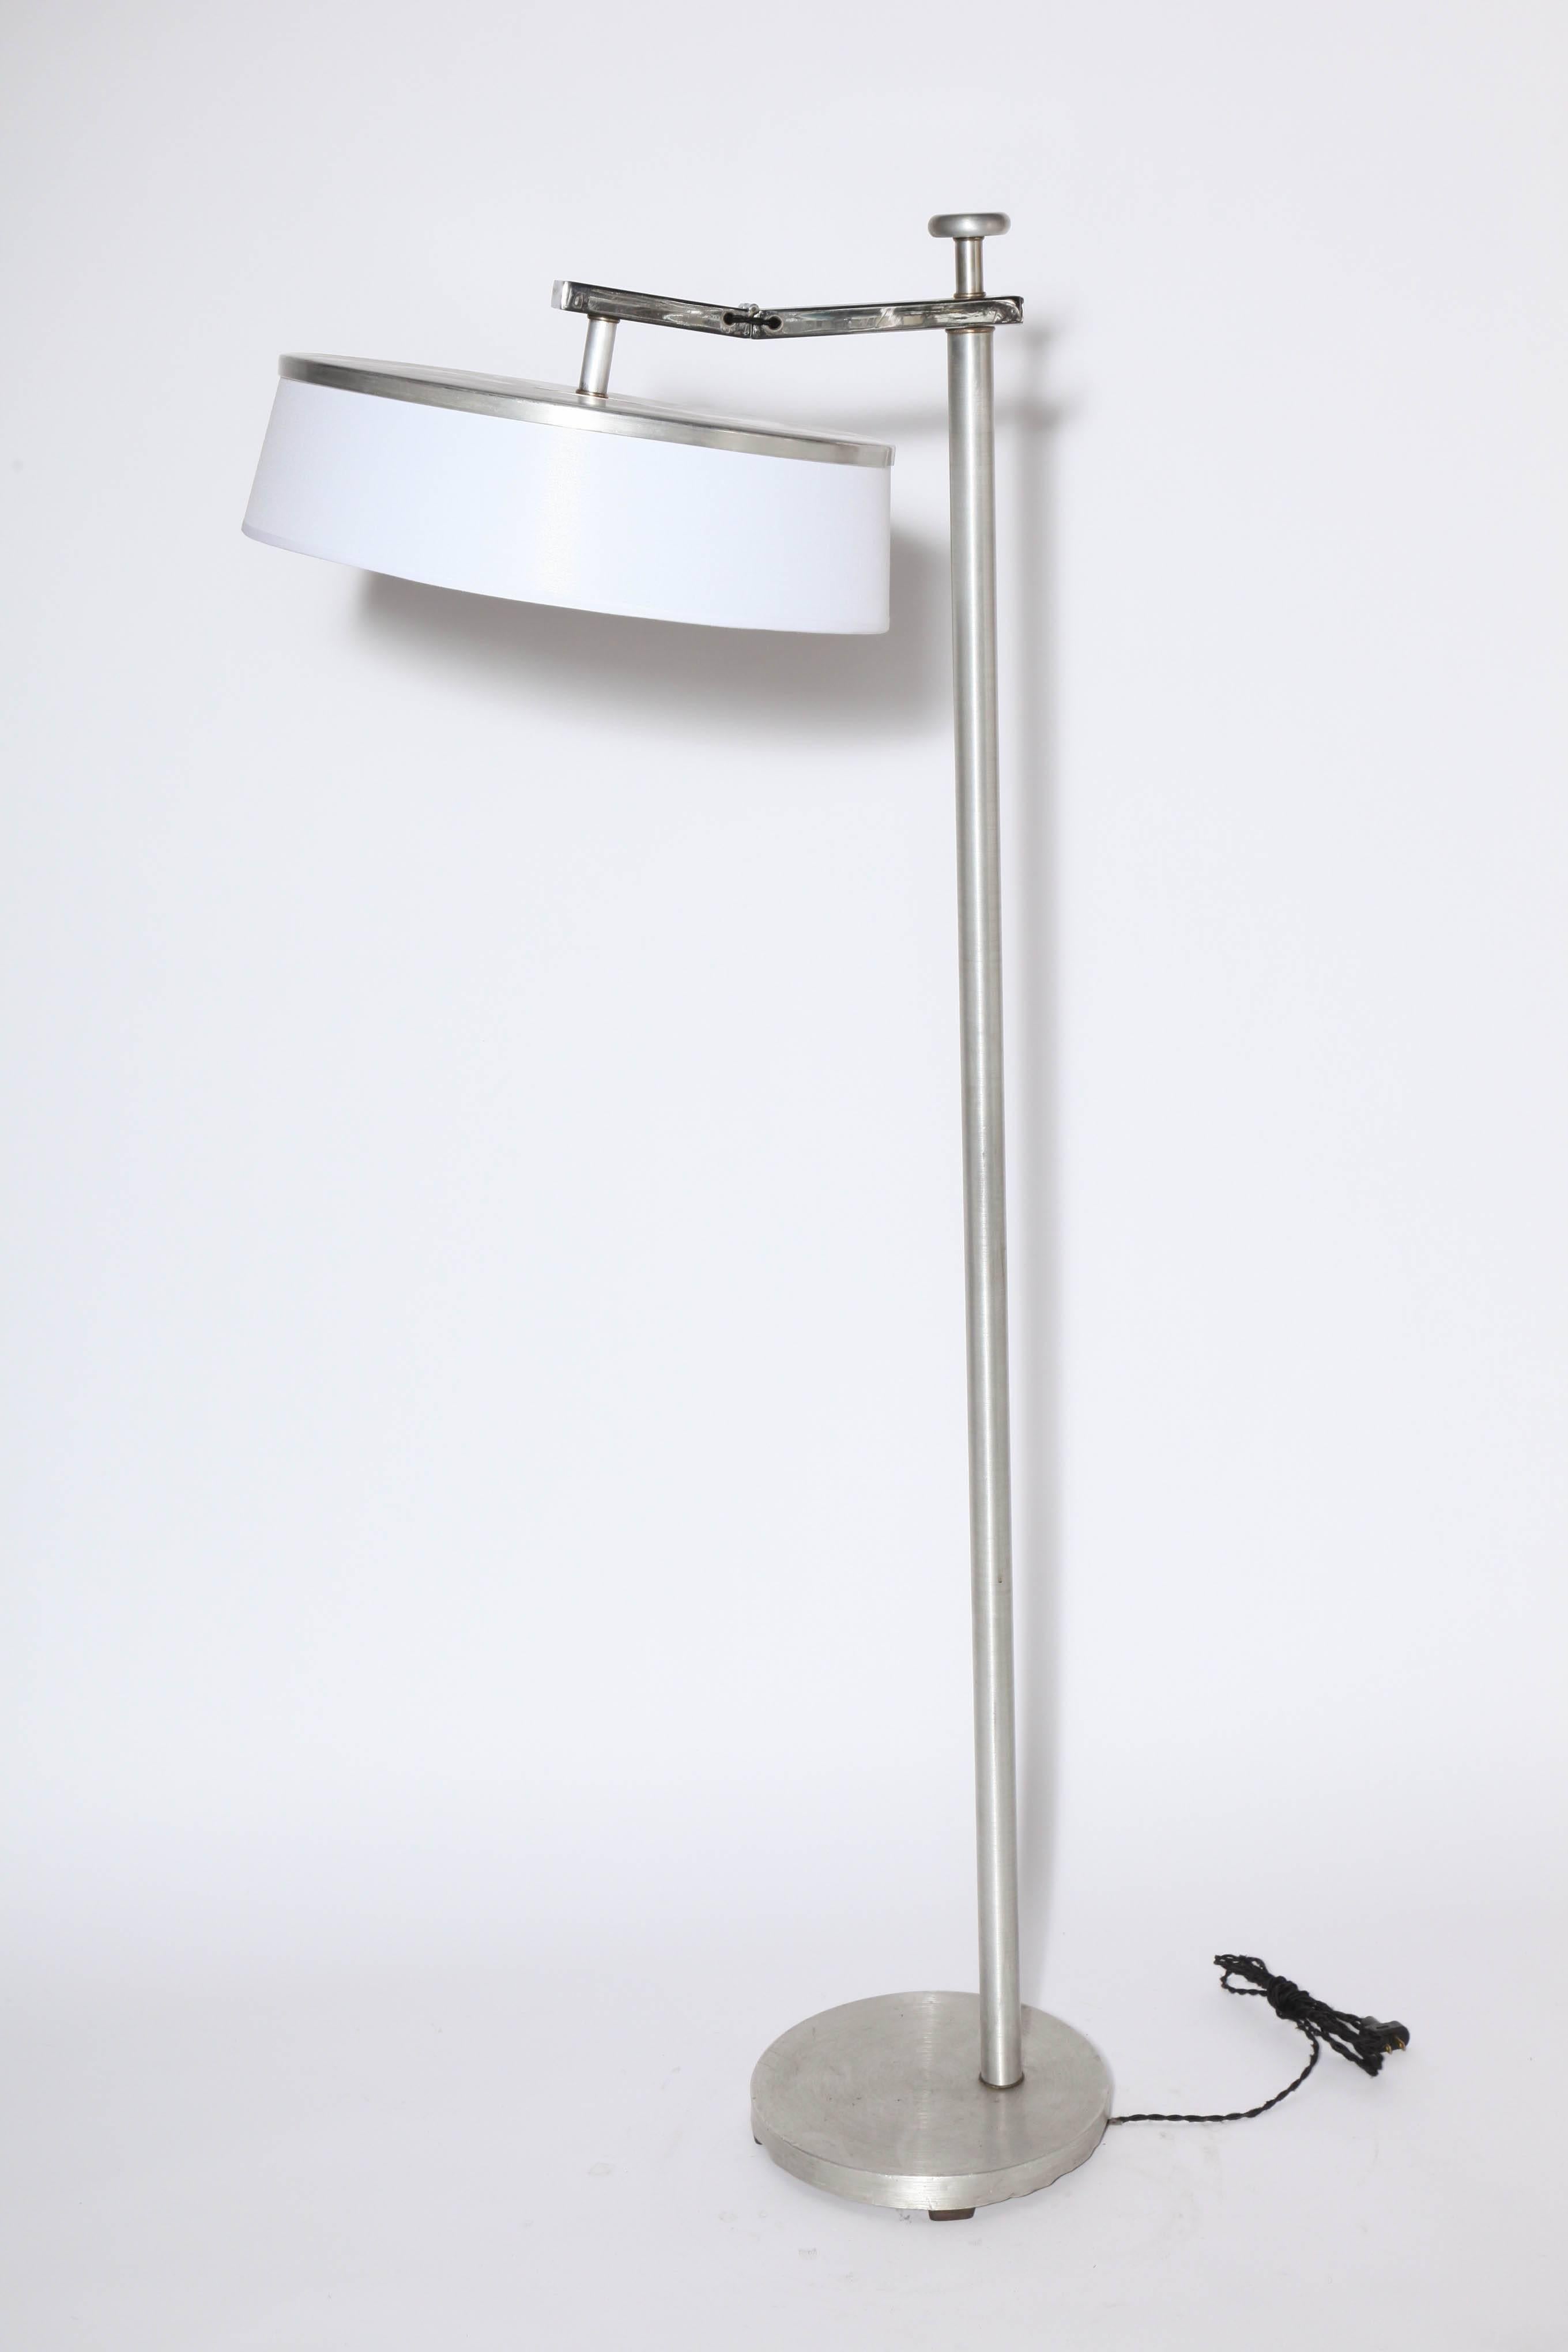 Original Kurt Versen Machine Age Tall Brushed Aluminum Floor Lamp. Shade flips up for upright or down for downlight. 16